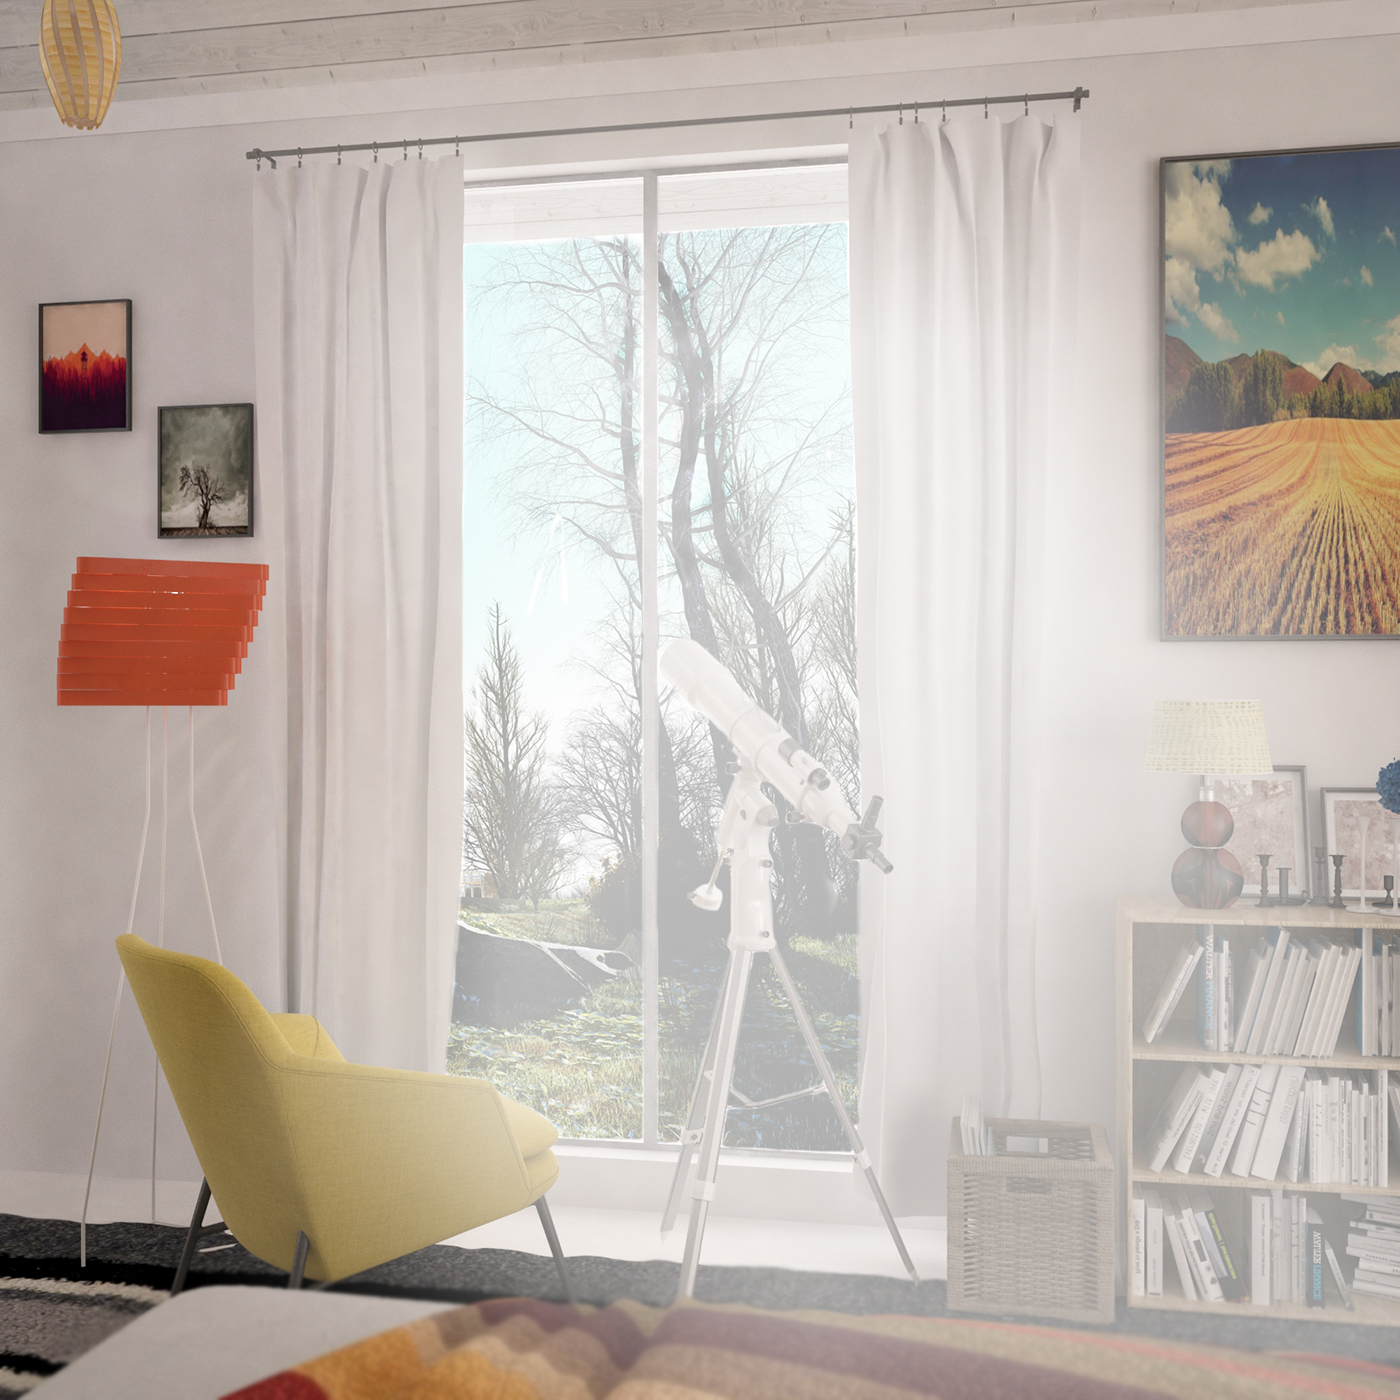 Cottage cabin 3ds max 3D Studio Max vray photoshop rendering Render RENDER CONCEPT Architectural rendering